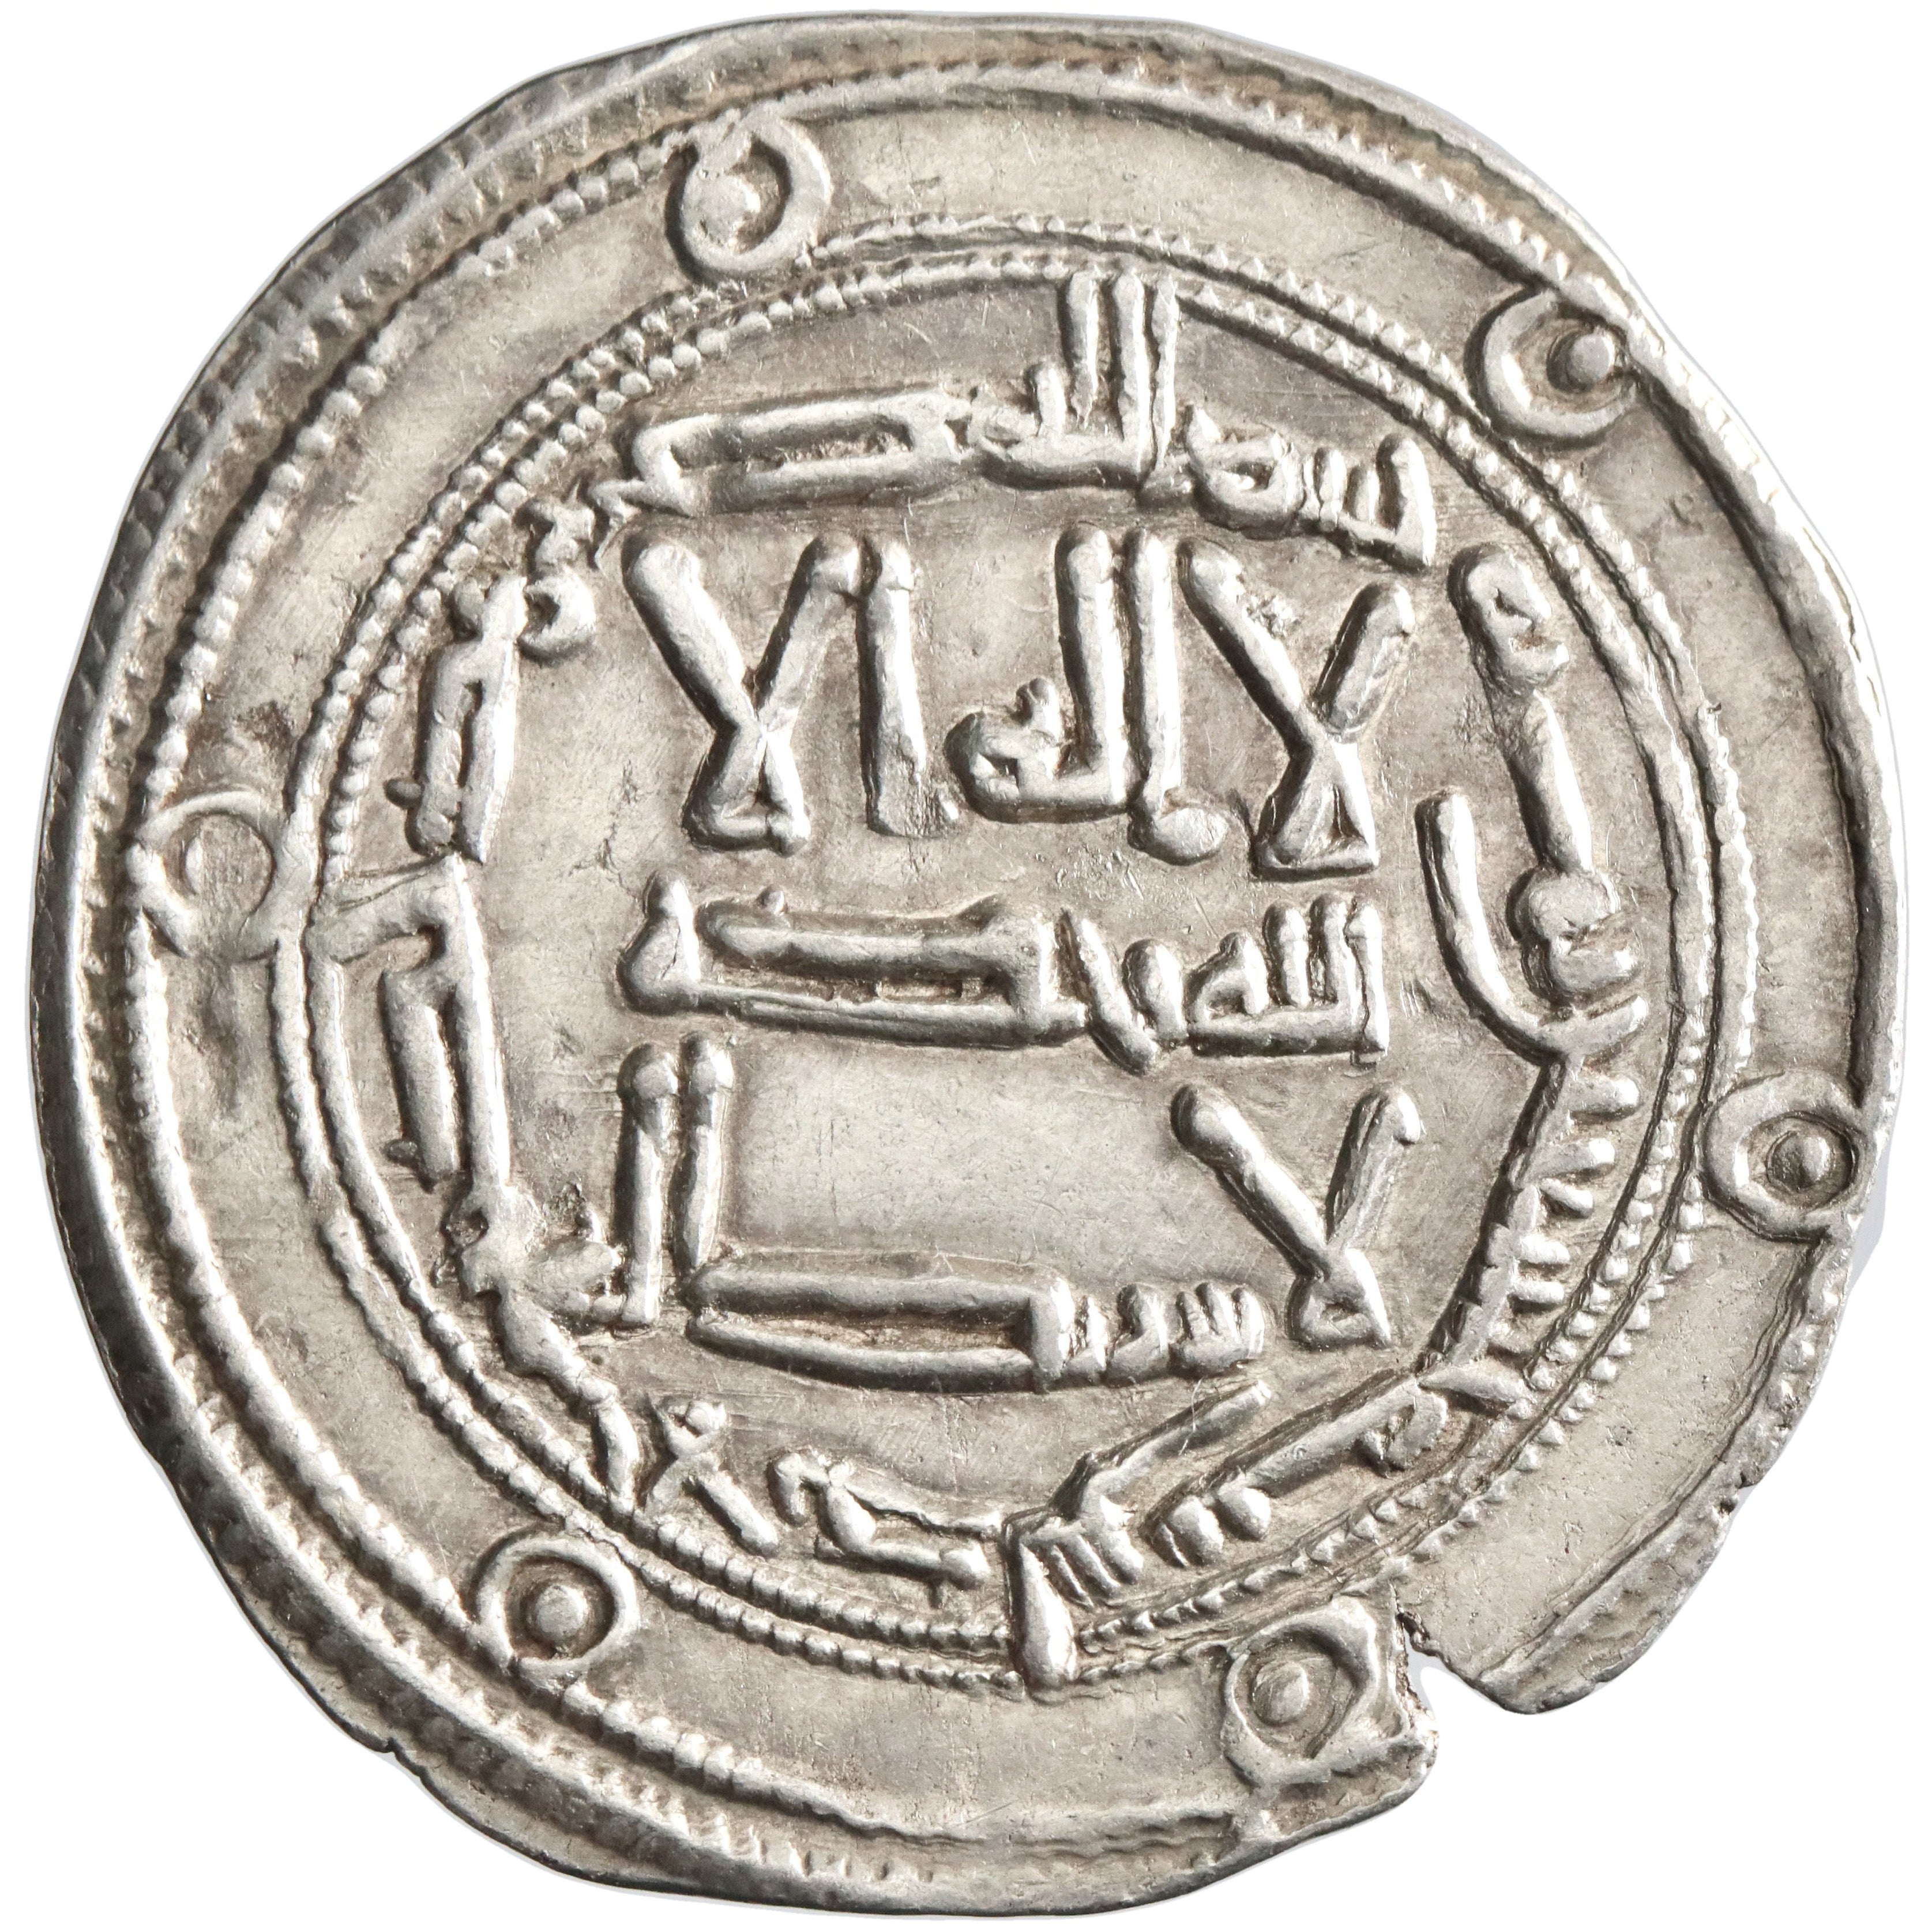 Umayyad of Spain, al-Hakam I, silver dirham, al-Andalus (Spain) mint, AH 190